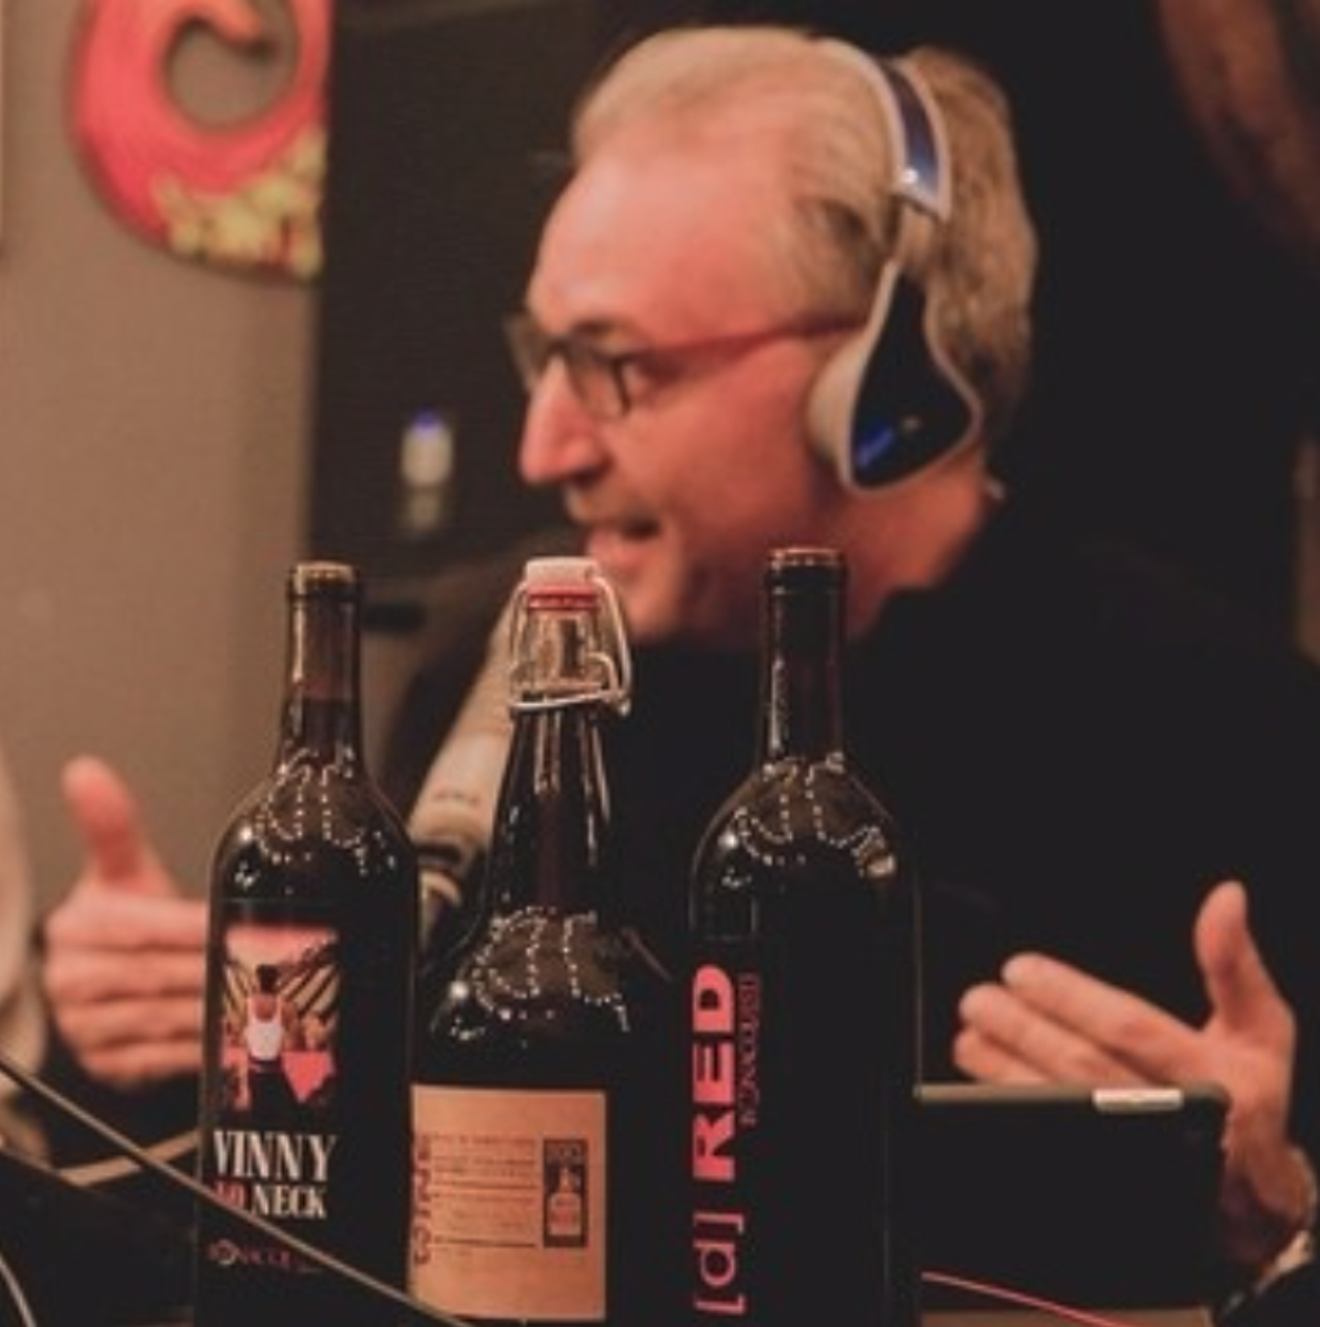 Paul Bonacquisti hosts Denver Wine Radio.